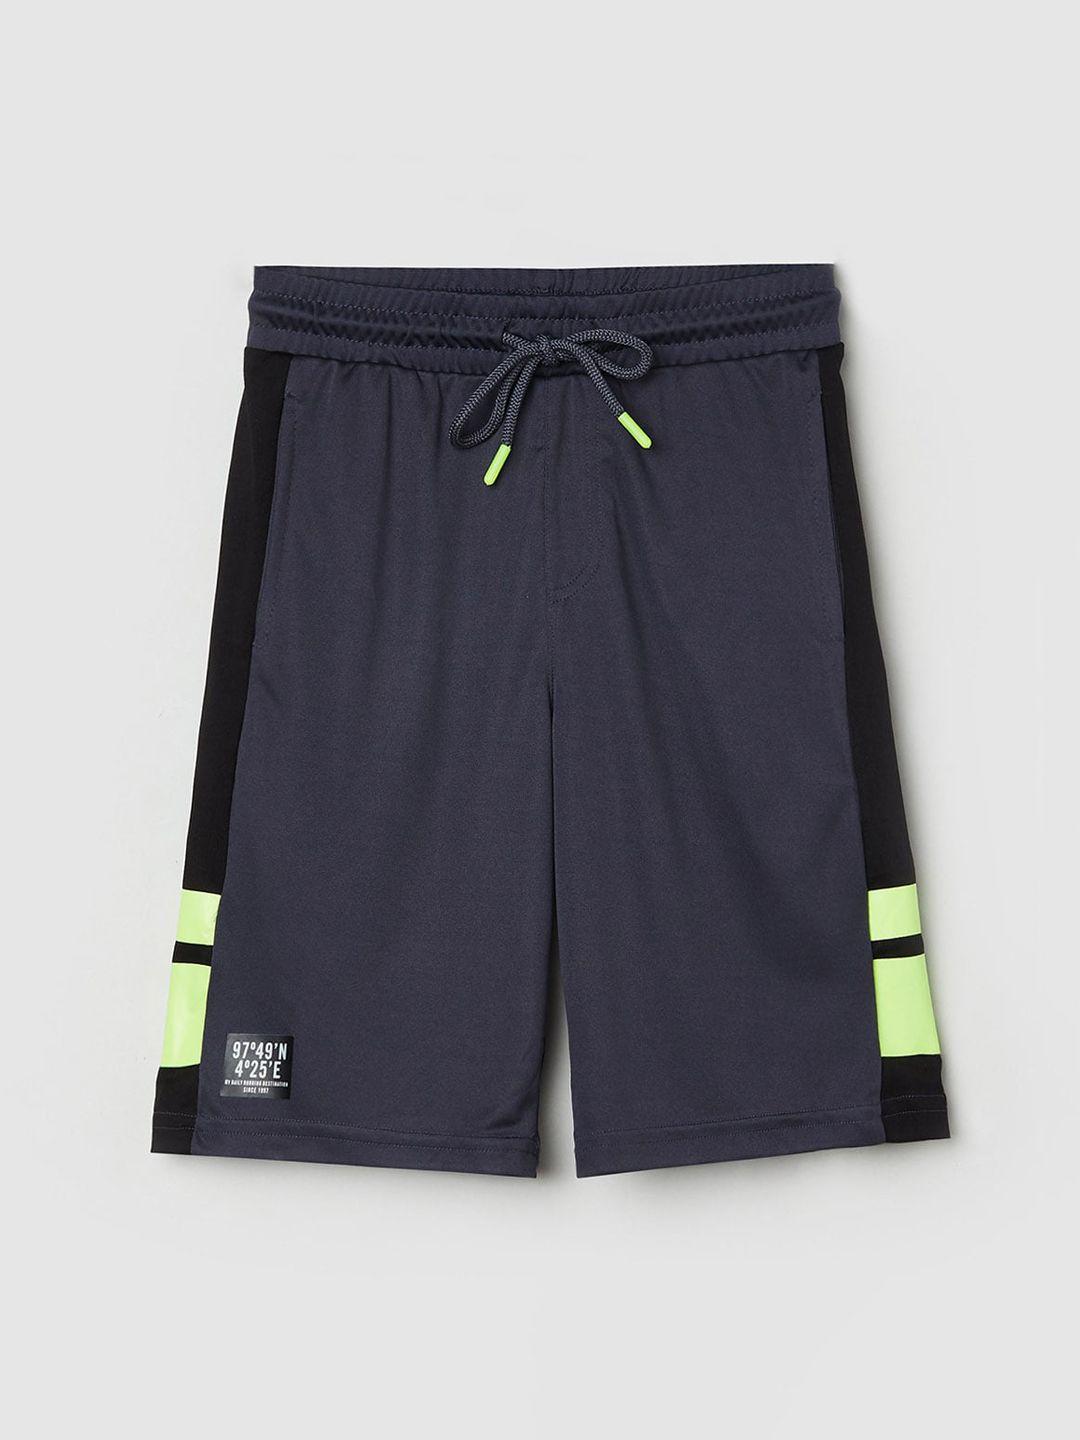 max boys charcoal & green solid shorts